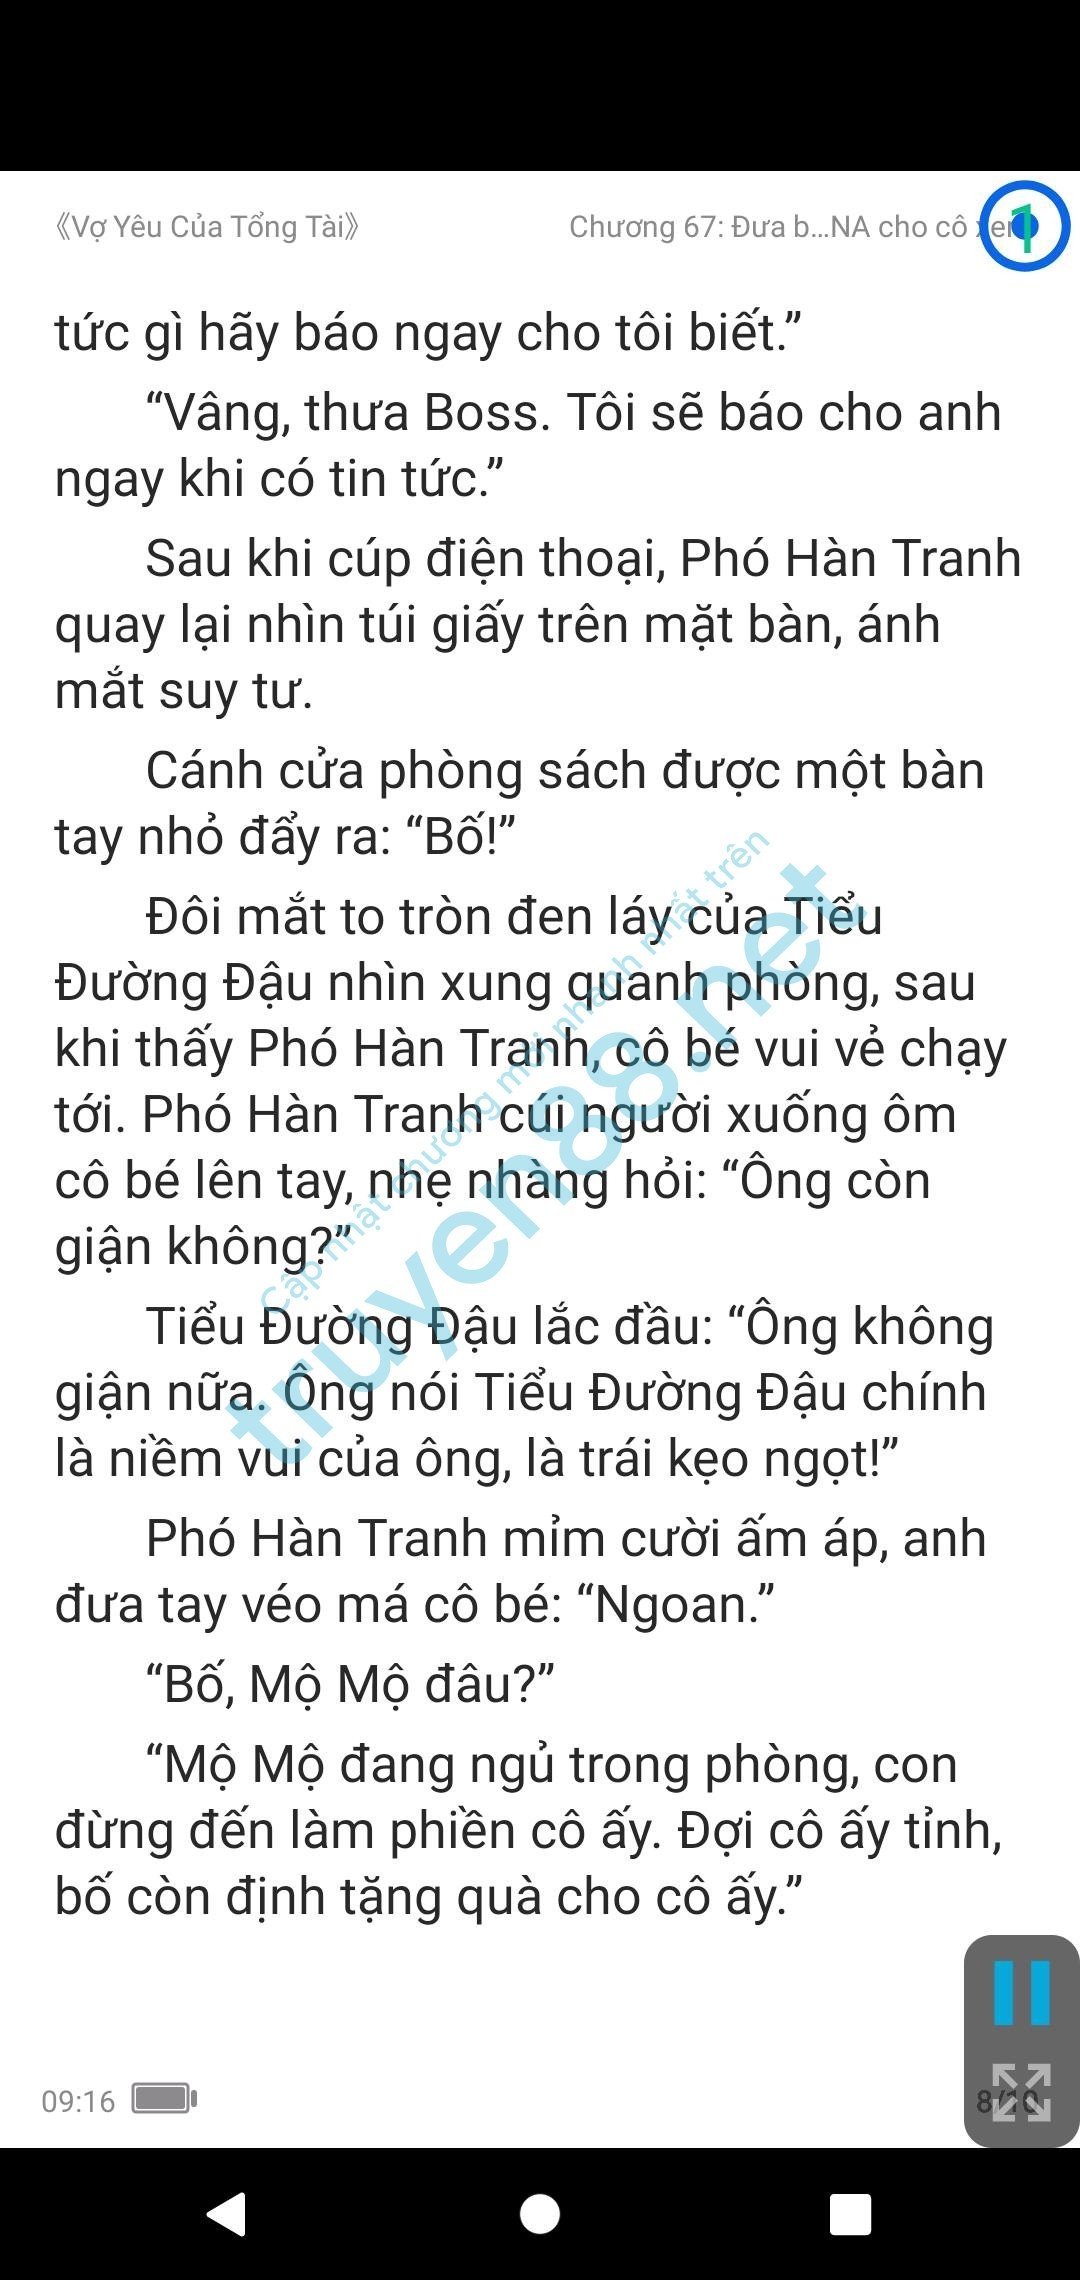 vo-yeu-cua-tong-tai-mo-vi-lan--pho-han-tranh-67-0